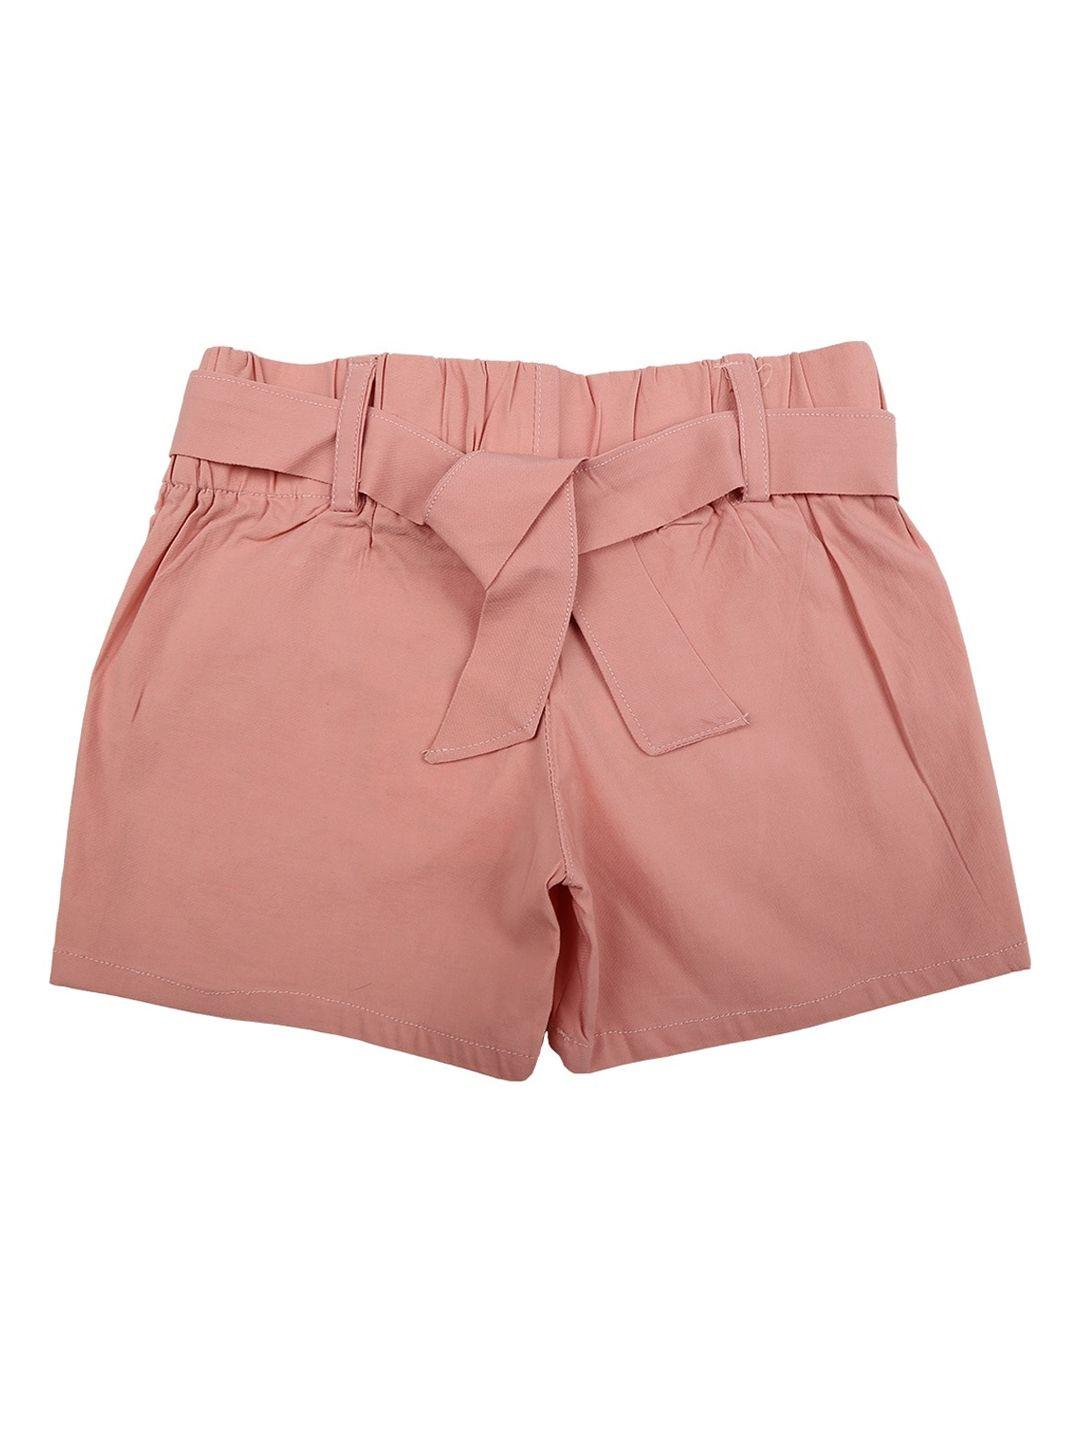 v-mart-kids-pink-solid-outdoor-cotton-shorts